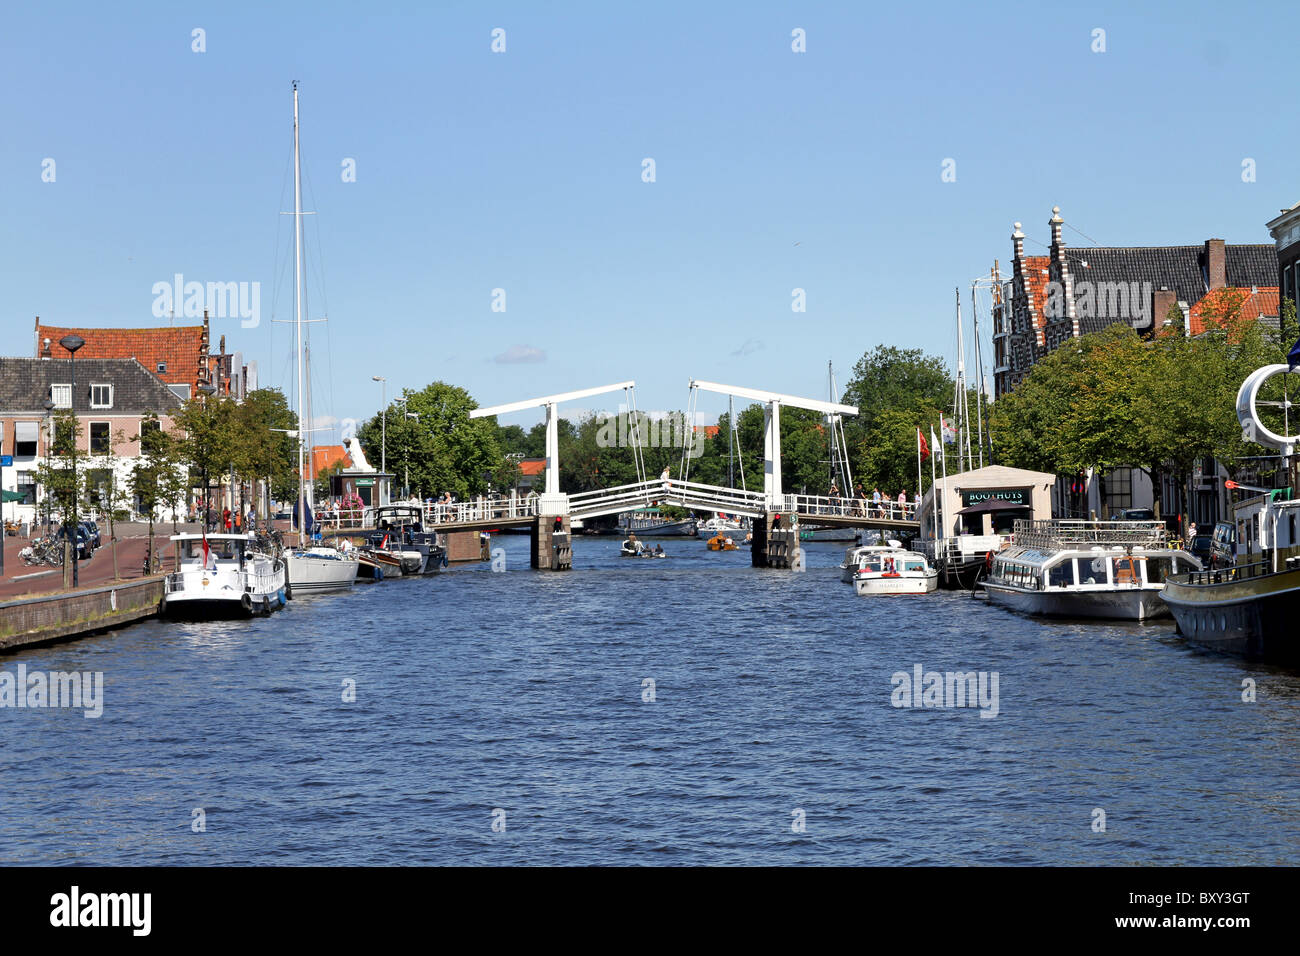 Gravestenenbrug le pont sur la rivière Spaarne Haarlem en Hollande, Banque D'Images